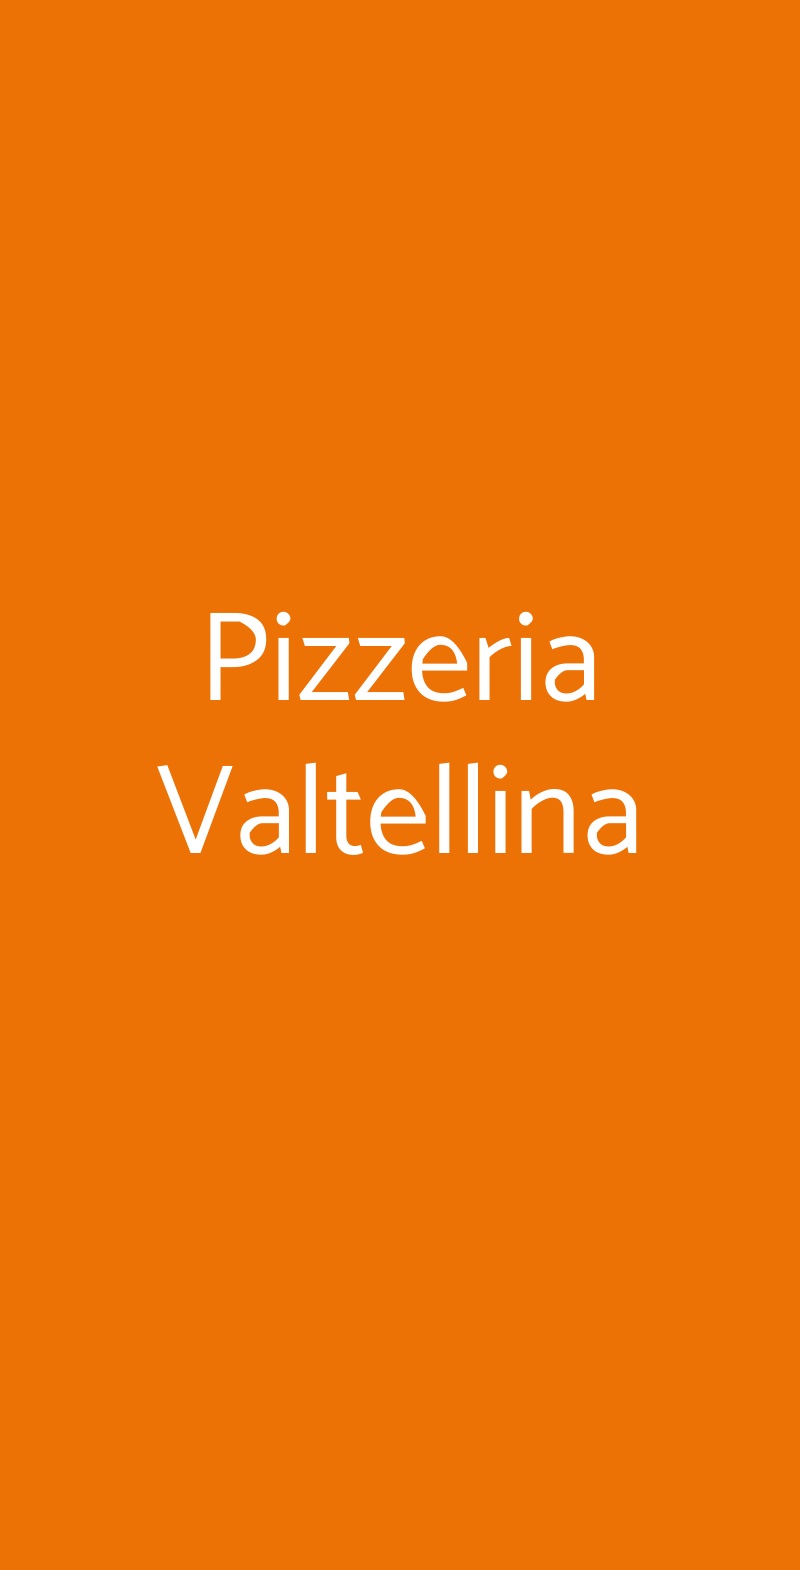 Pizzeria Valtellina Milano menù 1 pagina